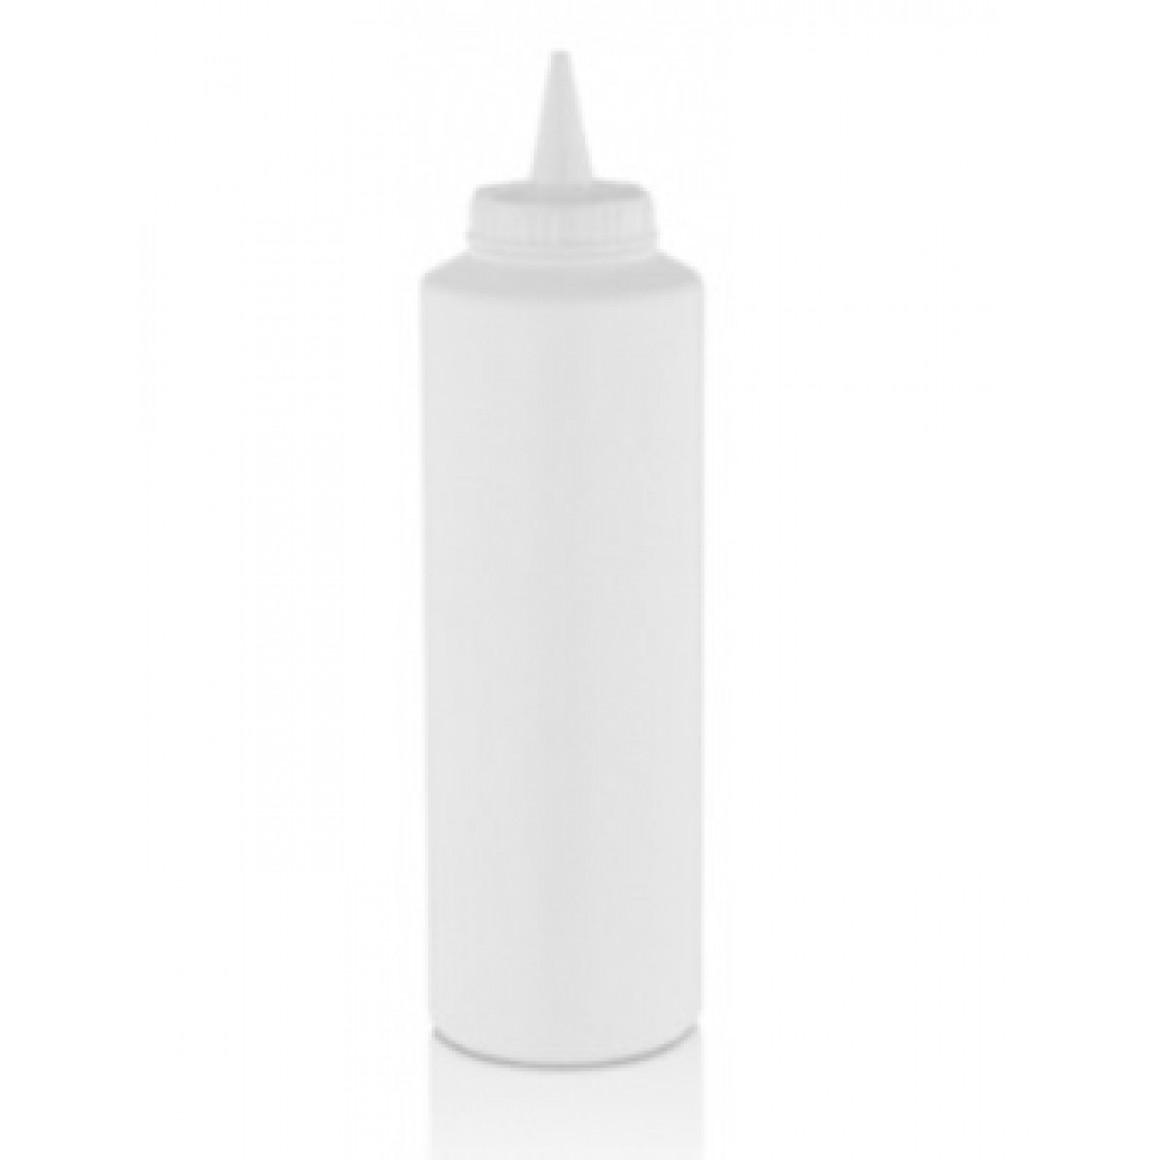 Squeeze bottle dispenser 250 ml White